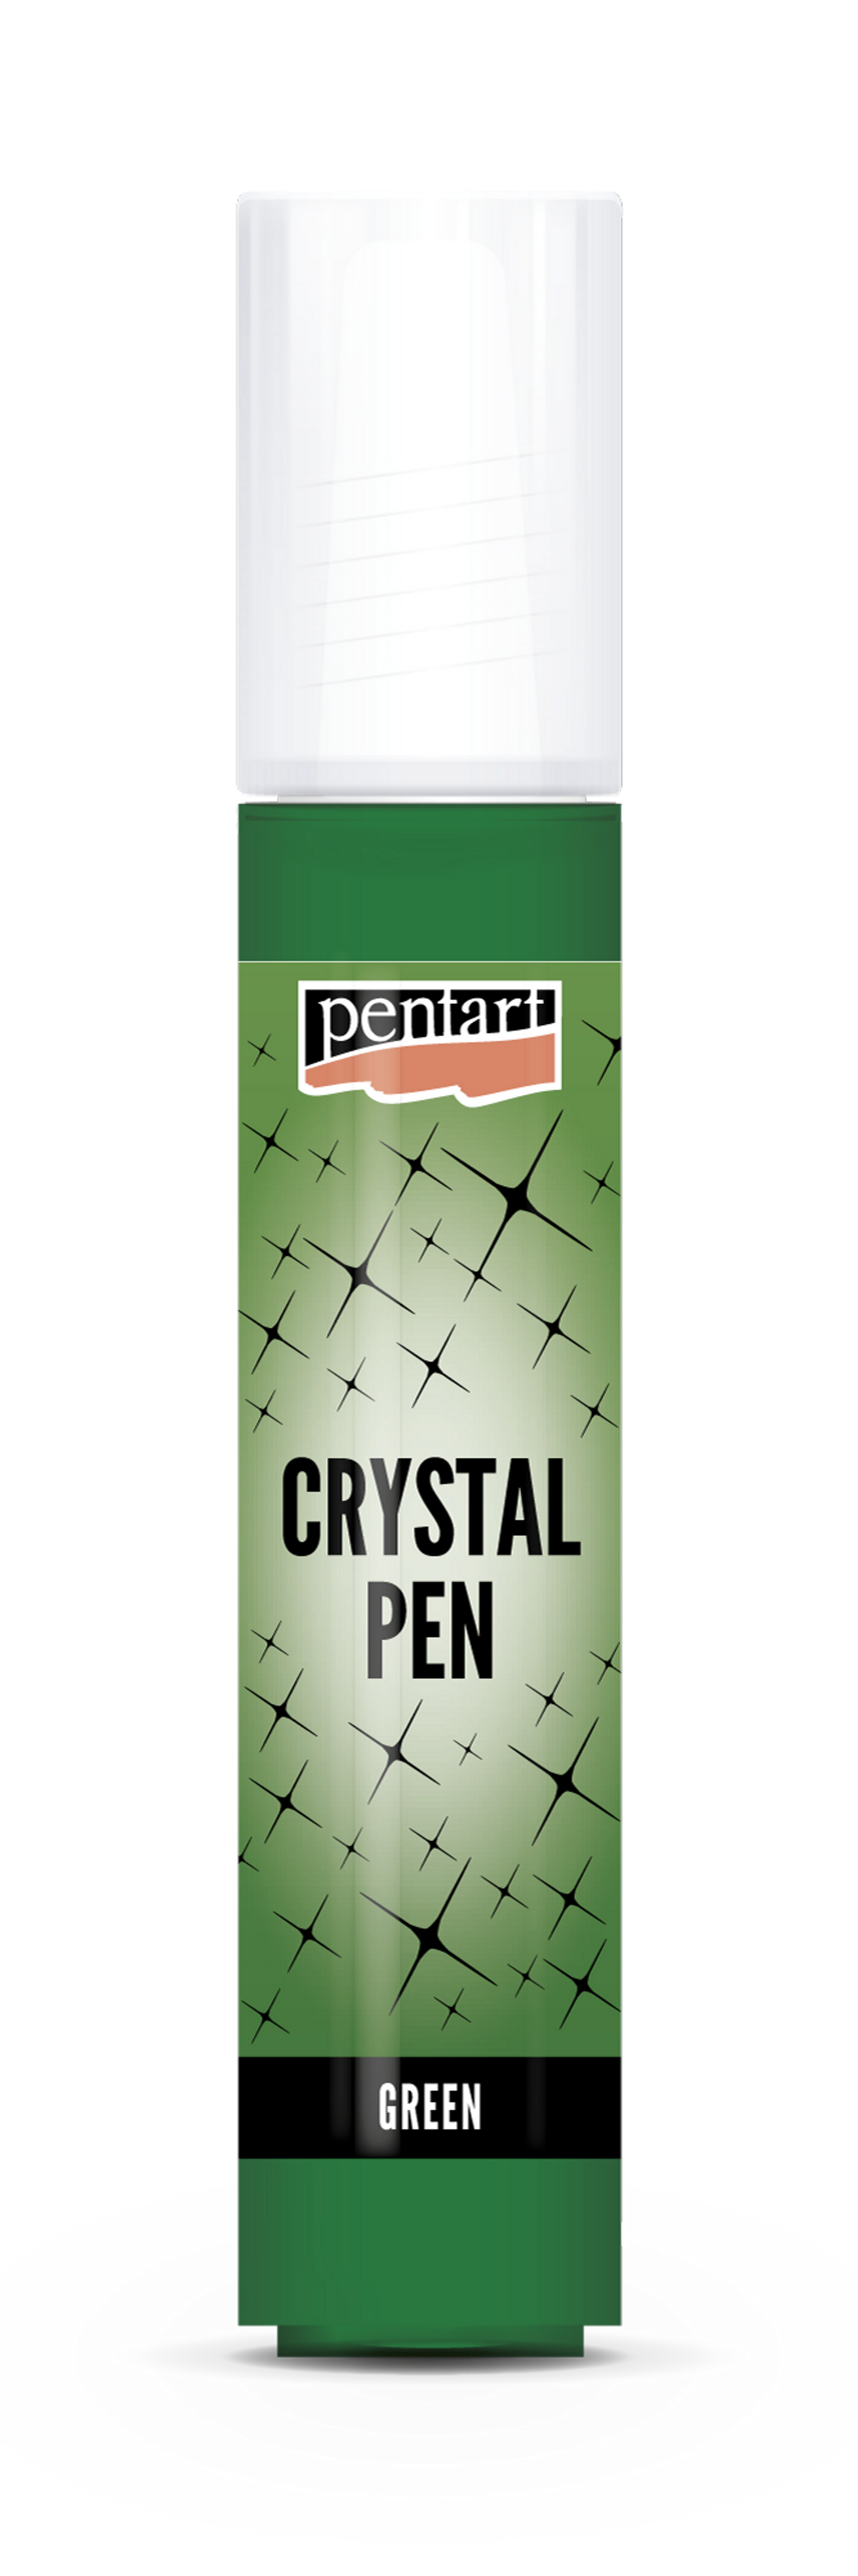 Pentart Crystal Pen 30ml